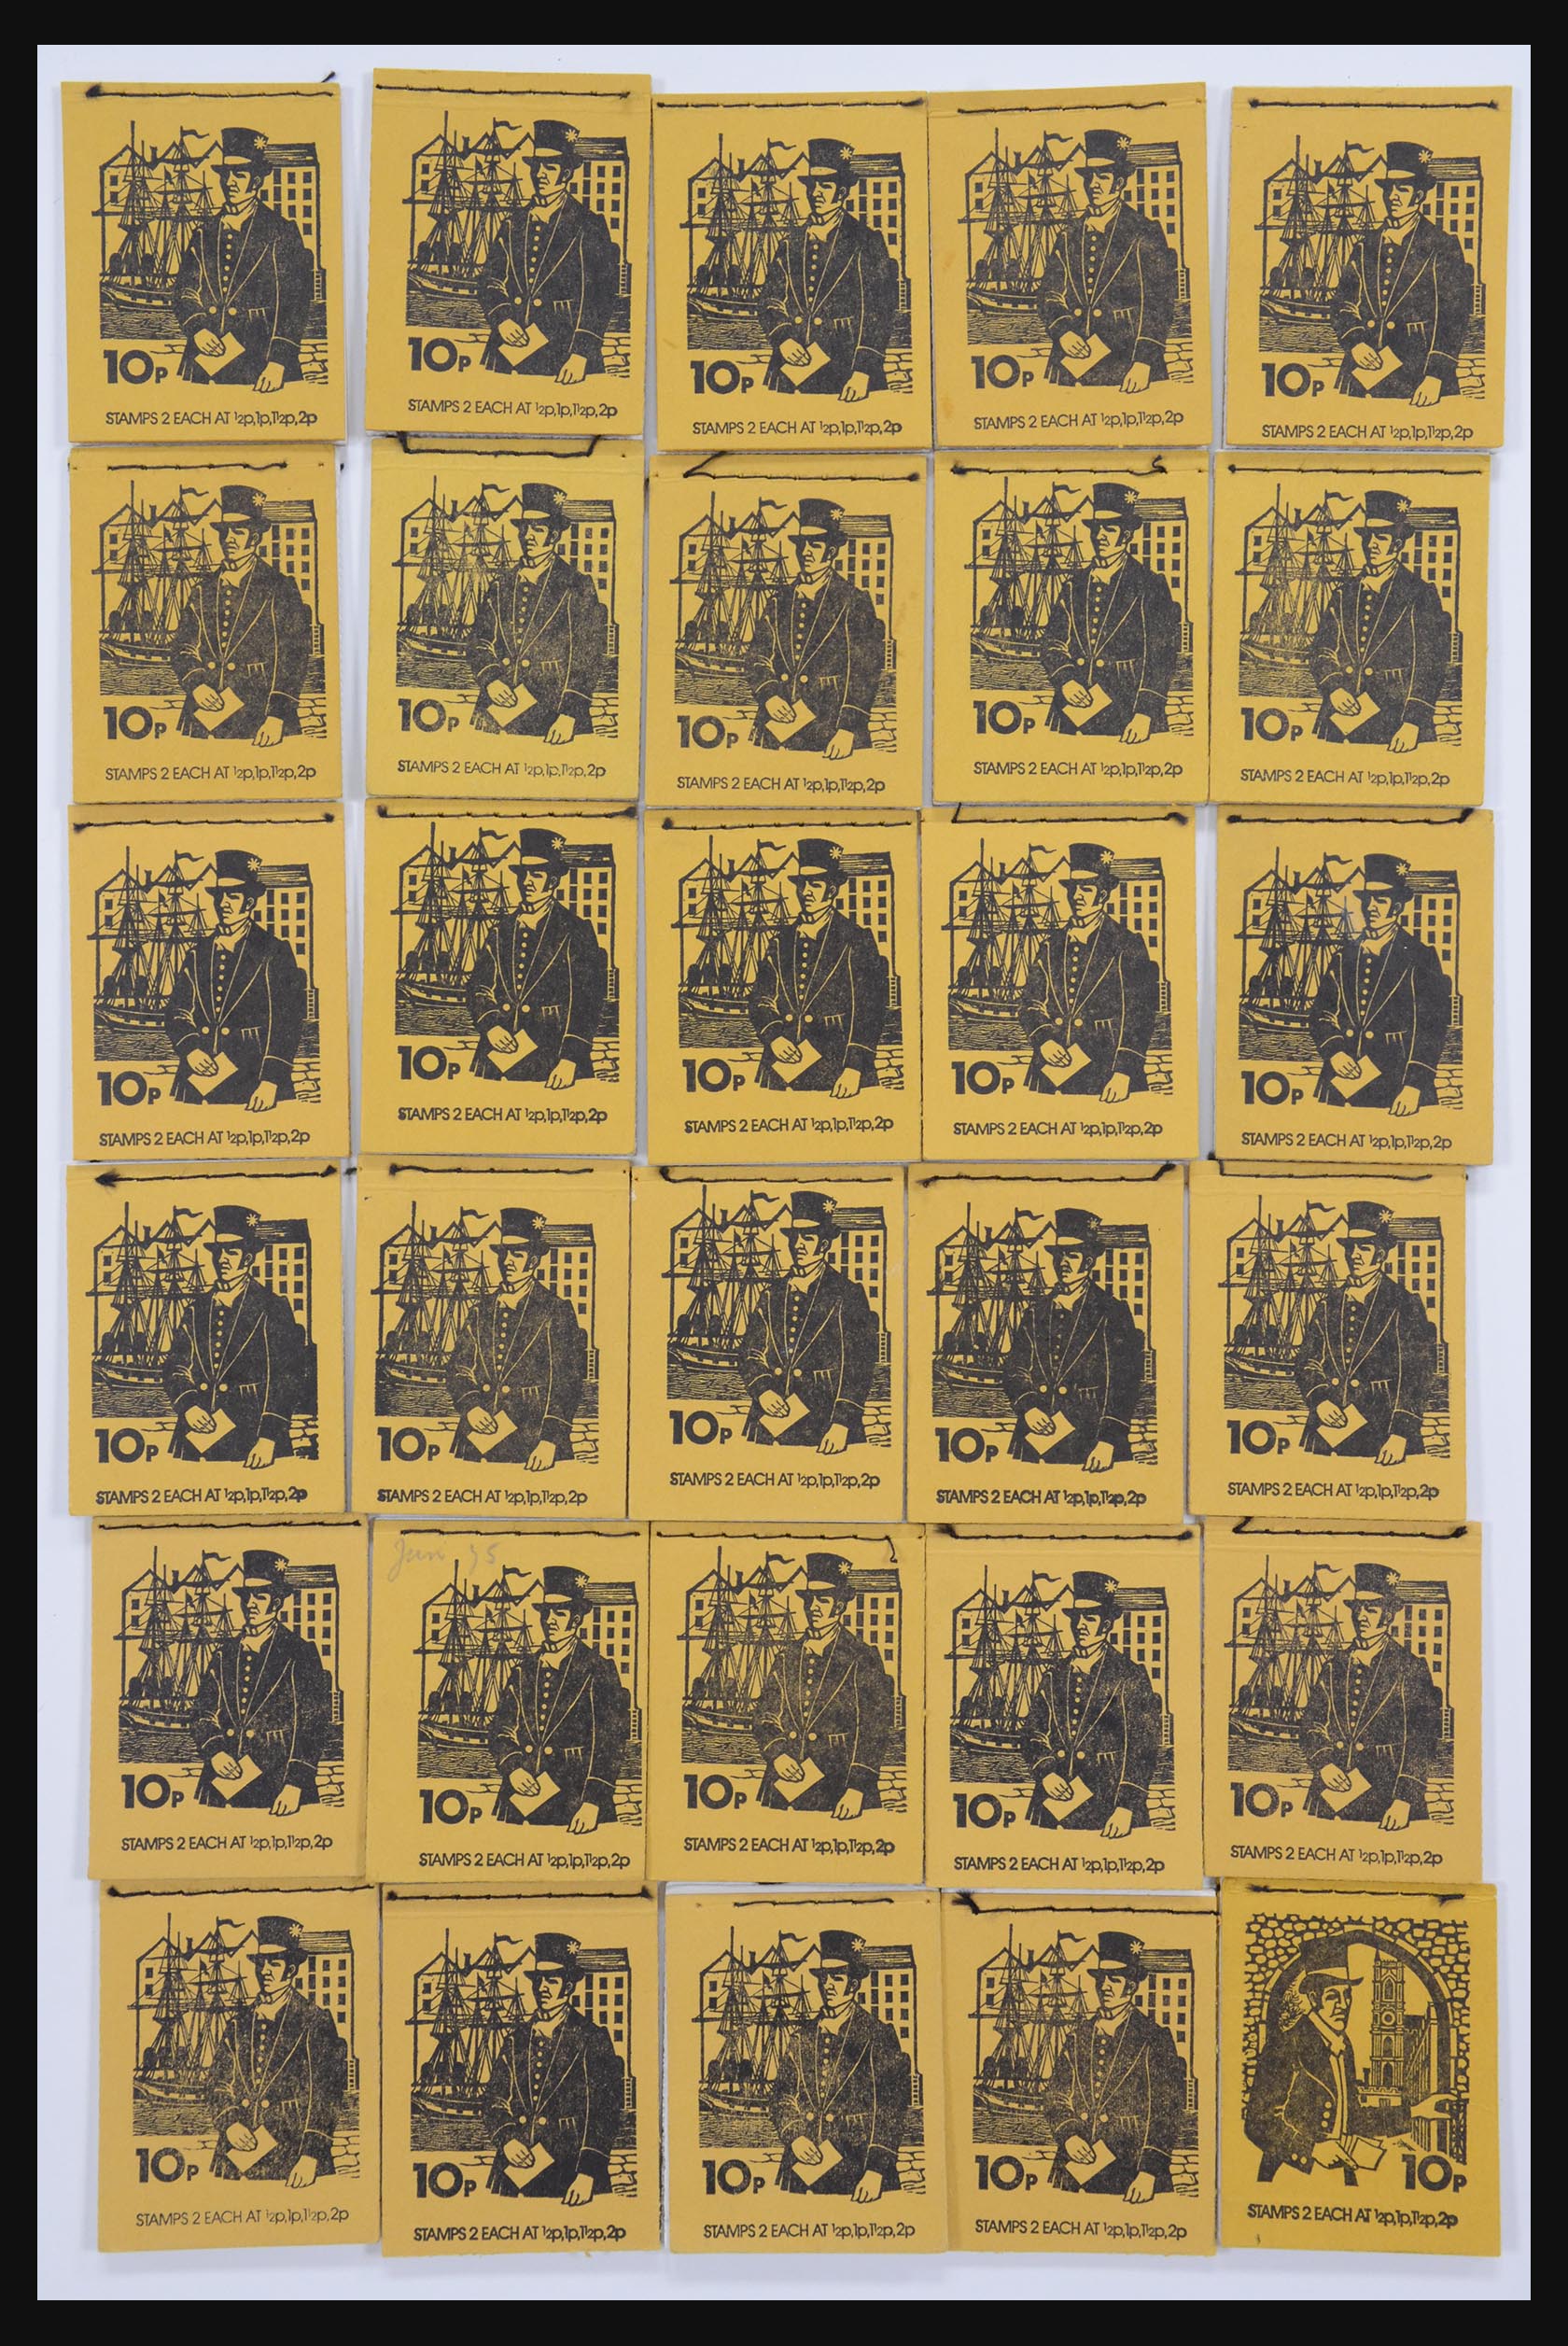 31961 005 - 31961 Great Britain stampbooklets 1971-1999.